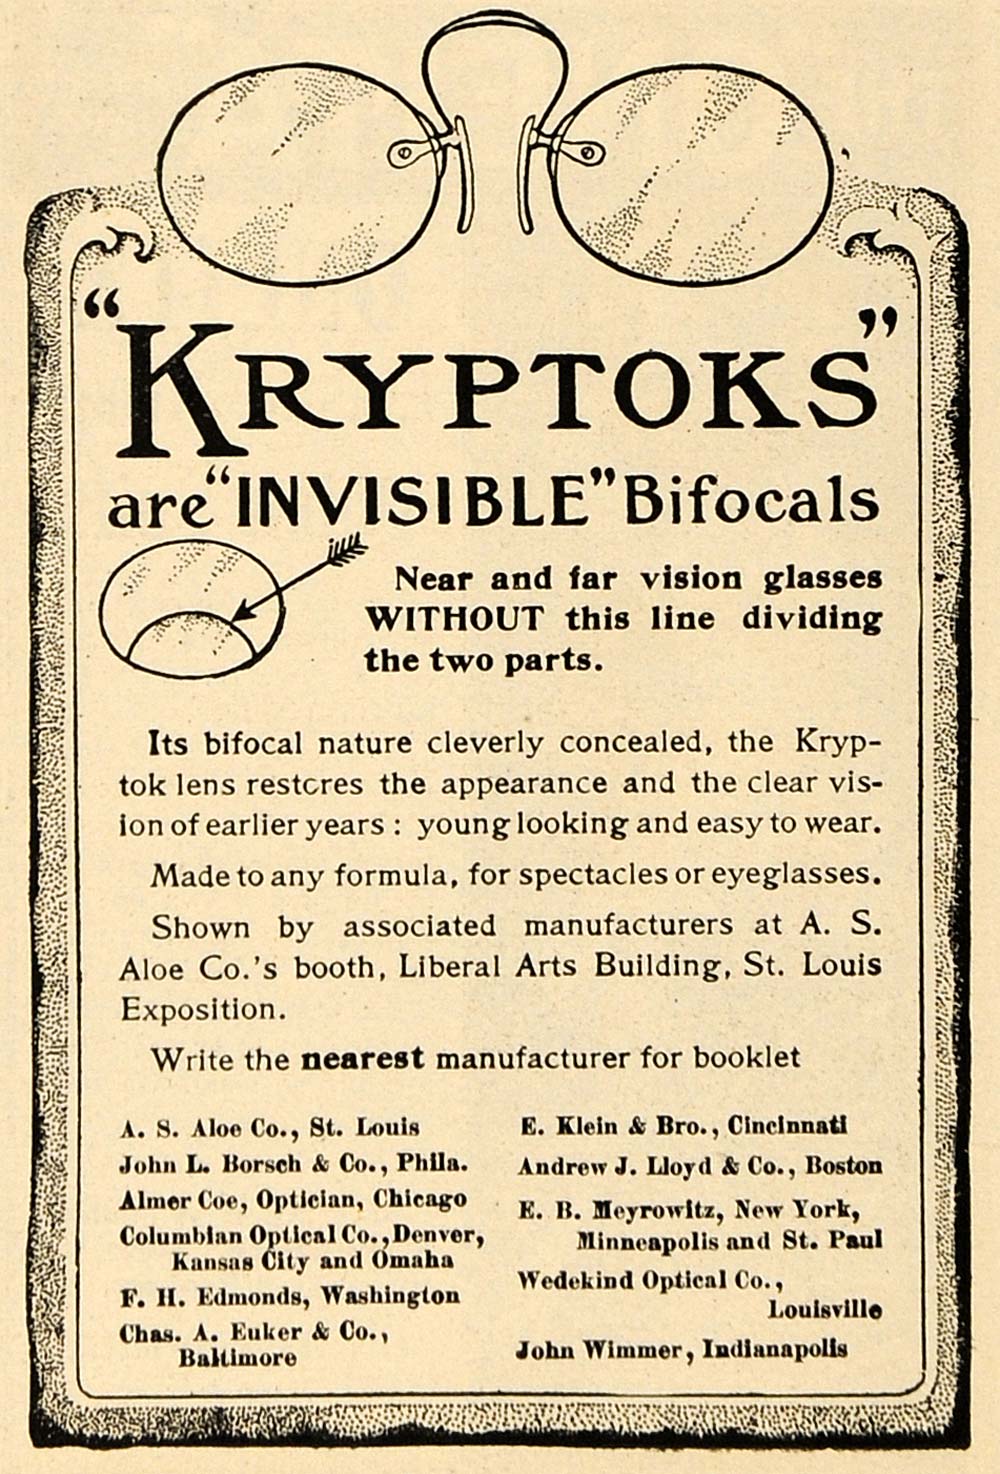 1904 Ad A S Aloe Co. Kryptoks Invisible Bifocal Glasses - ORIGINAL TOM3